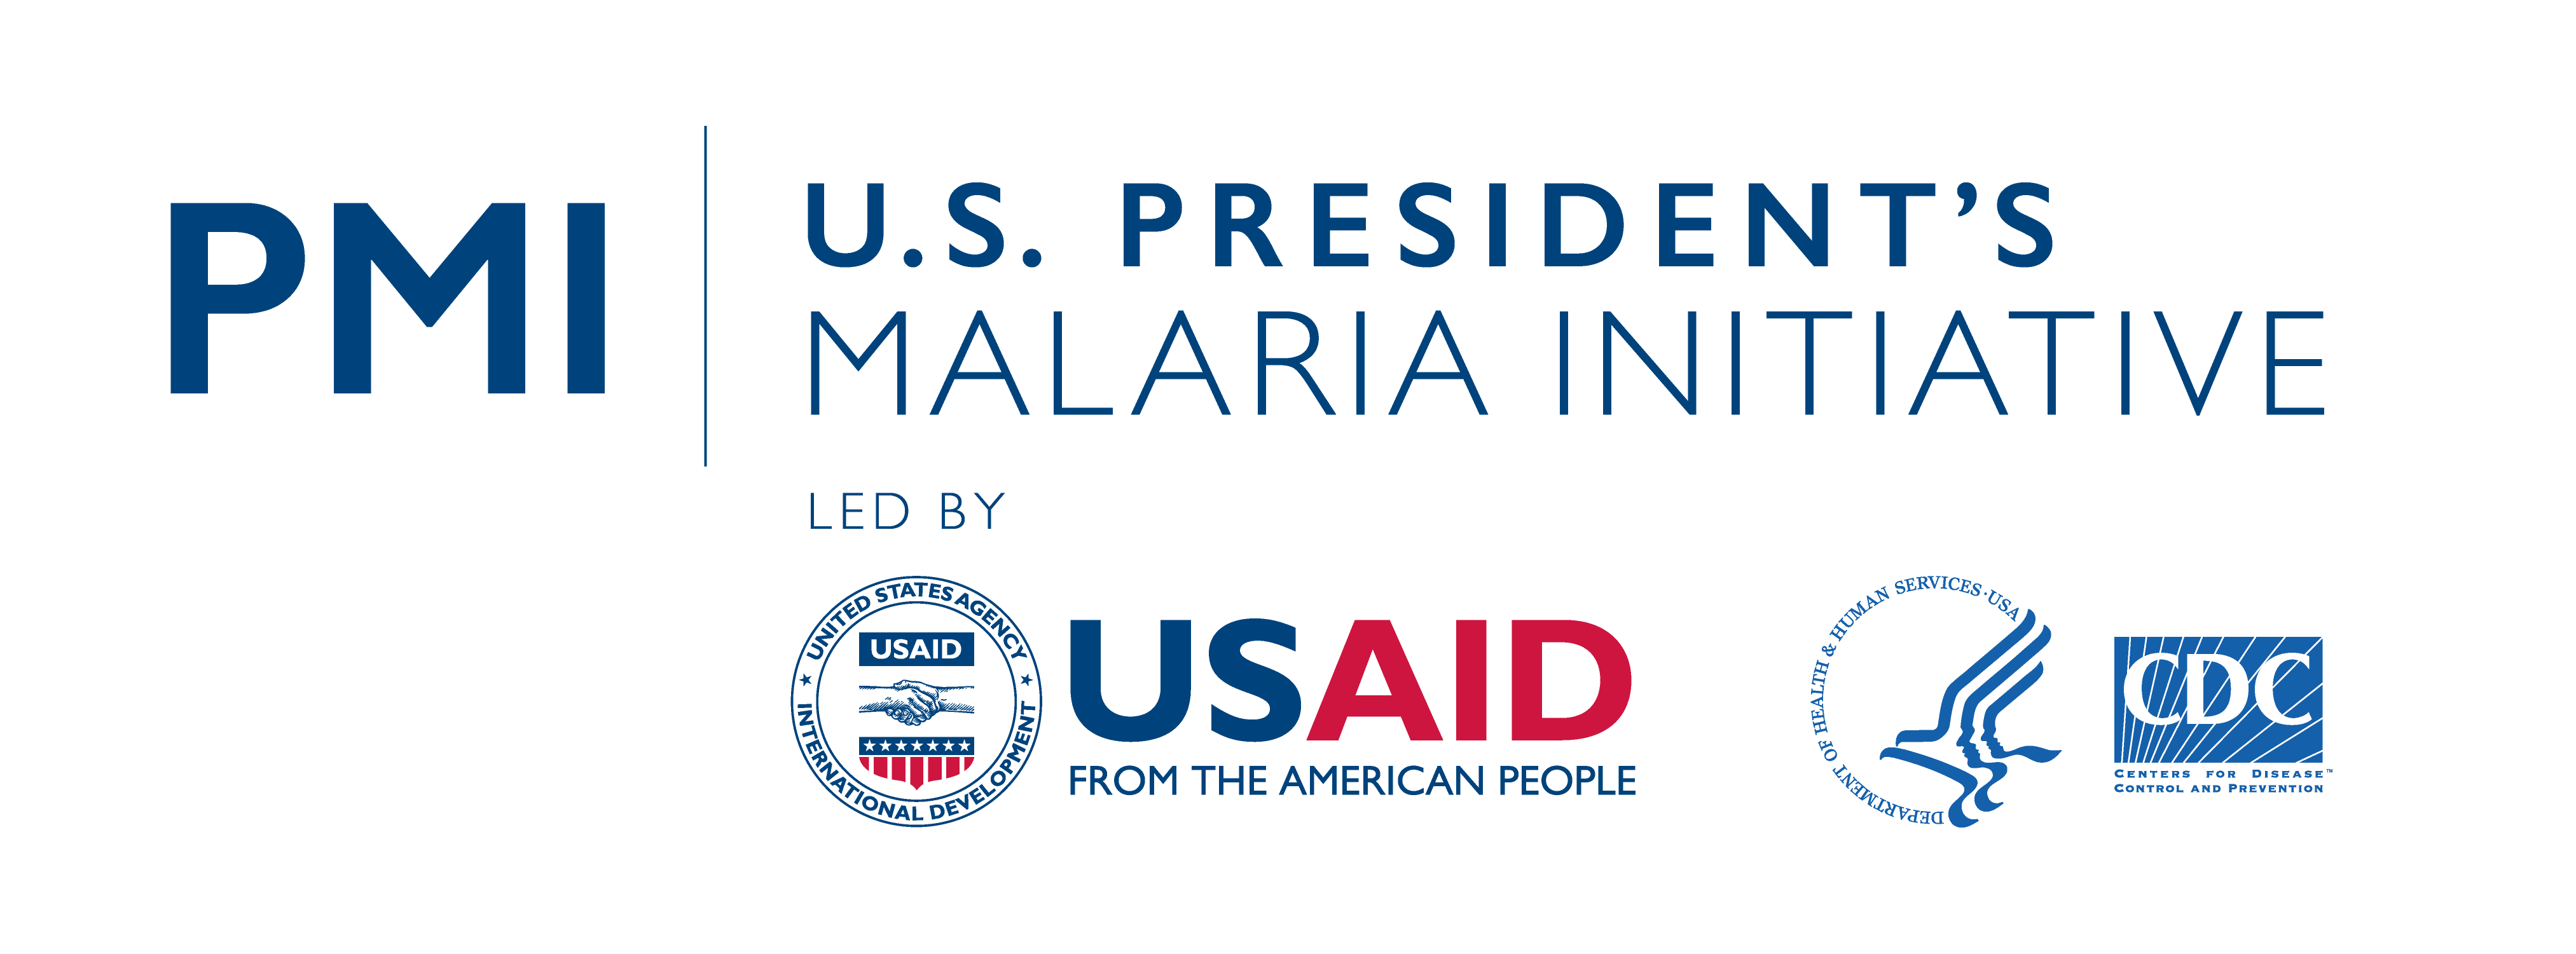 President's Malaria Initiative Logo